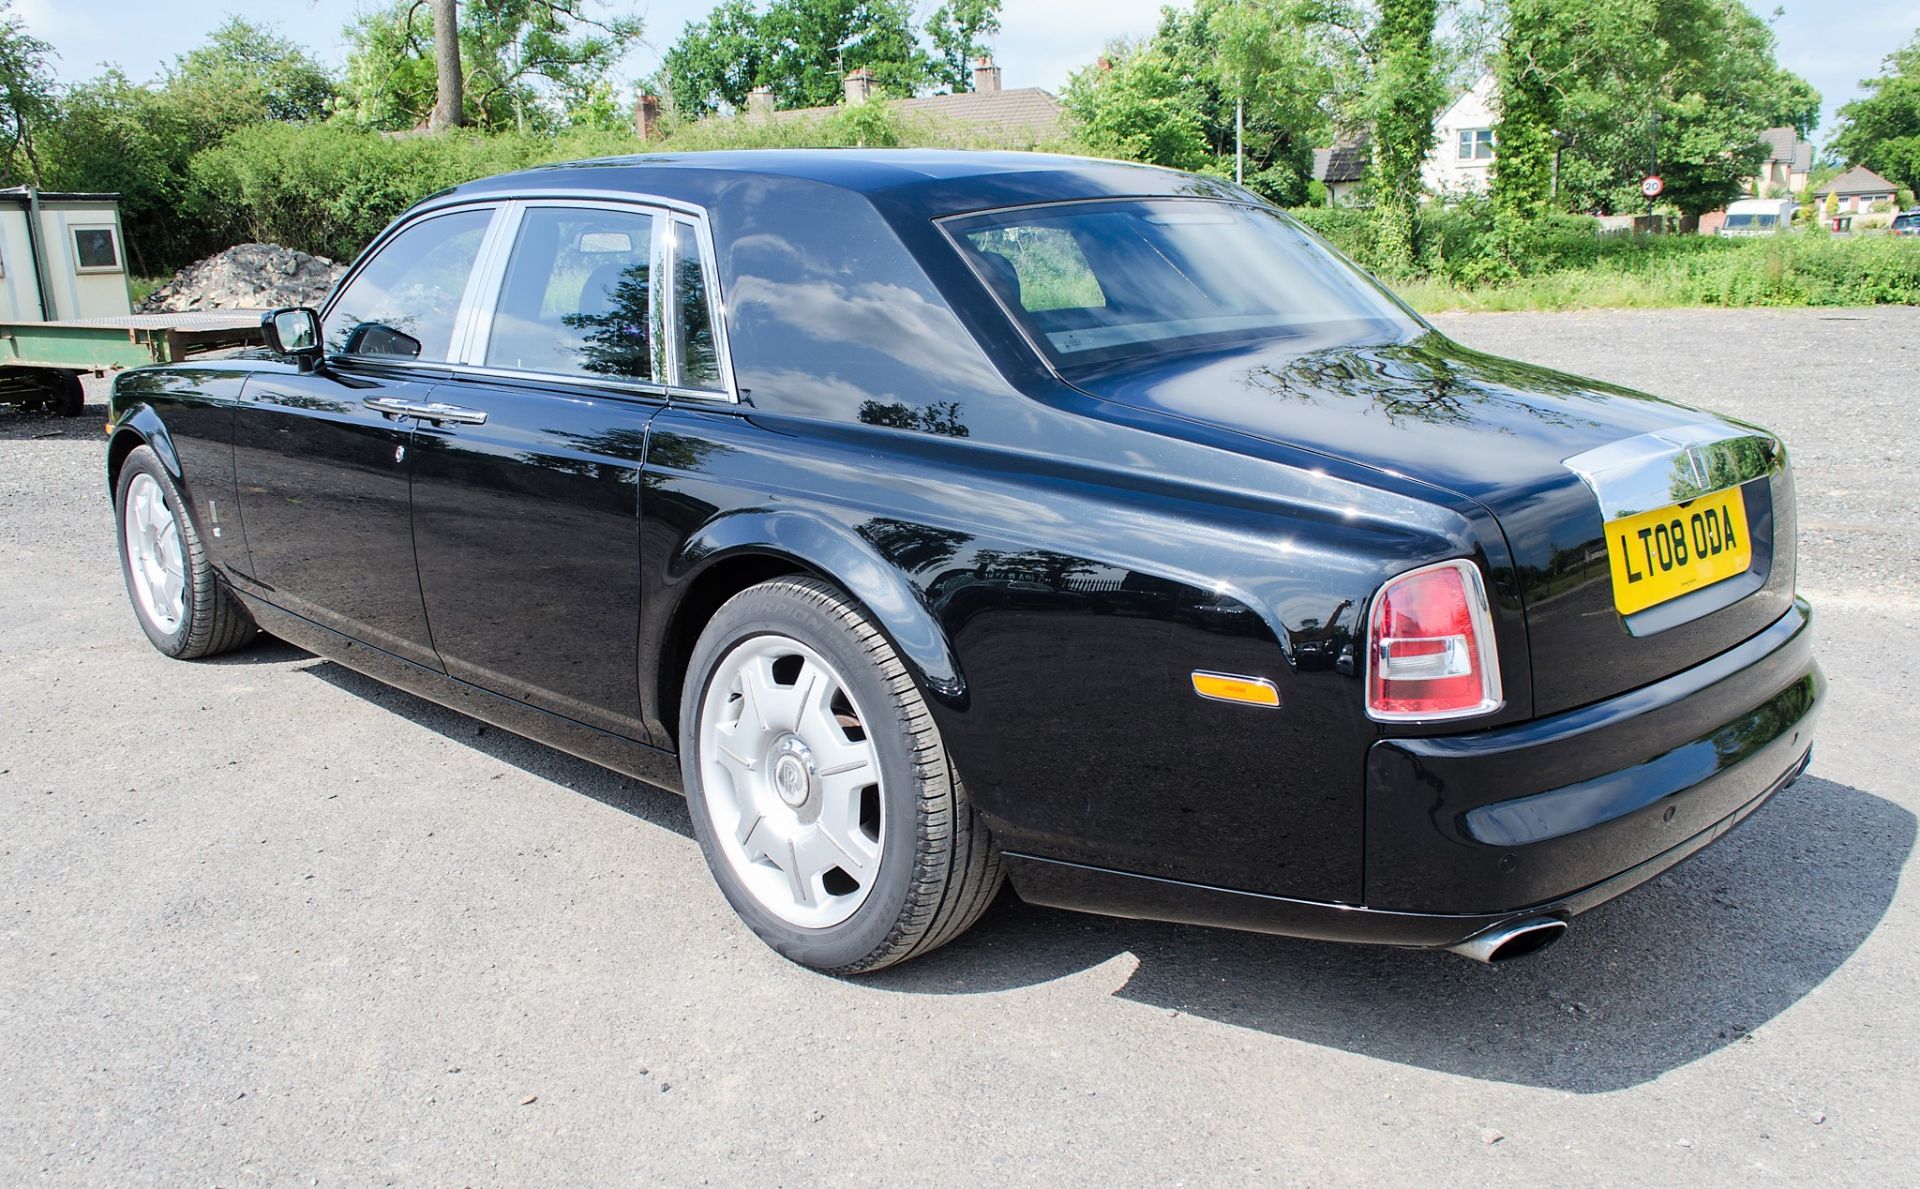 Rolls Royce Phantom VII 6.75 litre petrol 4 door saloon car  Reg No: LT 08 ODA Date of Registration: - Image 6 of 44